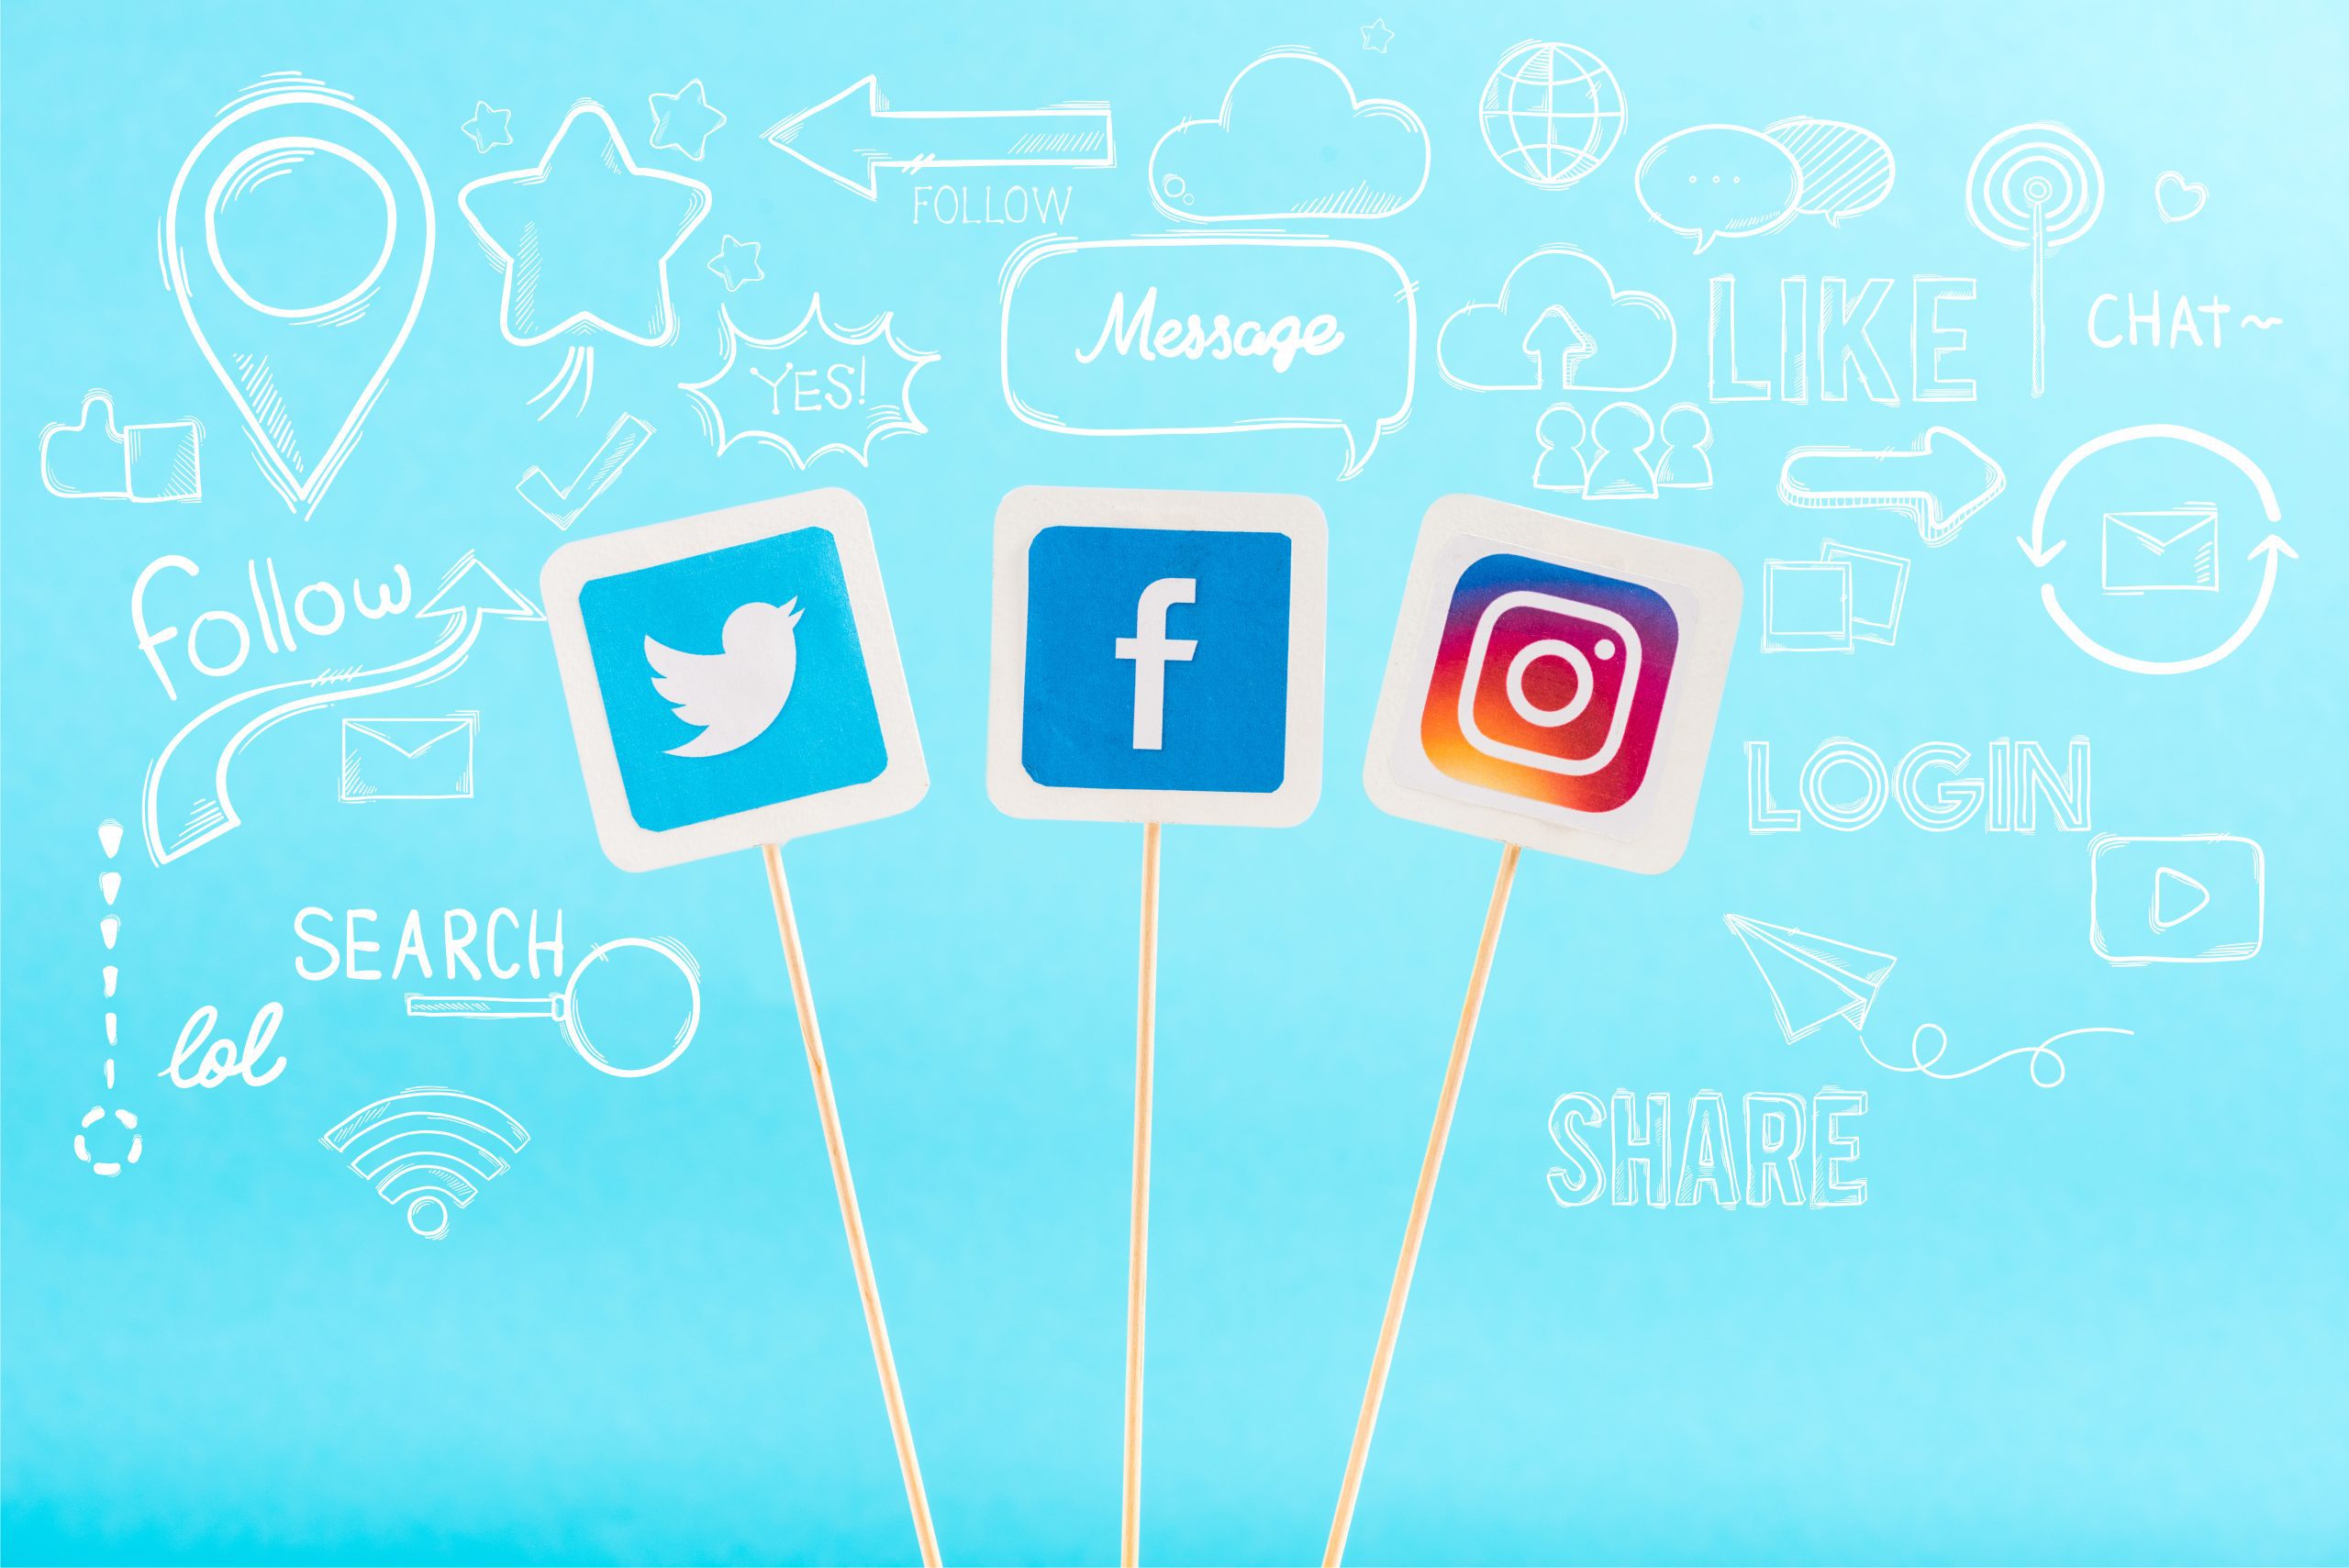 twitter, facebook, and instagram logos